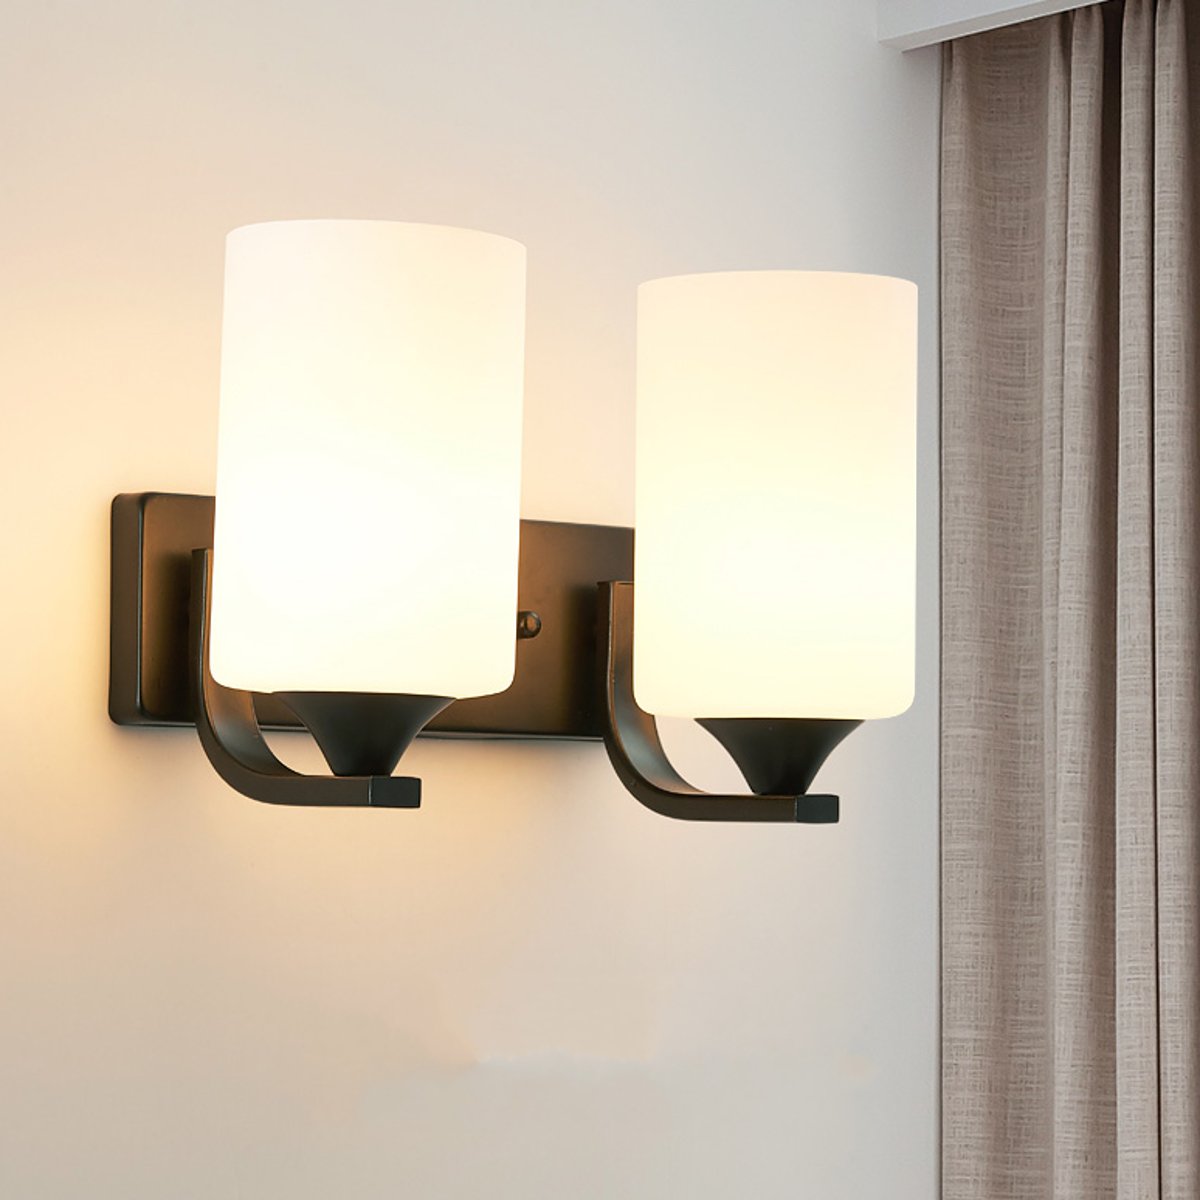 Modern-Wall-Light-Bedroom-Living-Room-Lamp-Glass-Sconce-Stair-Lighting-Fixture-1582213-5